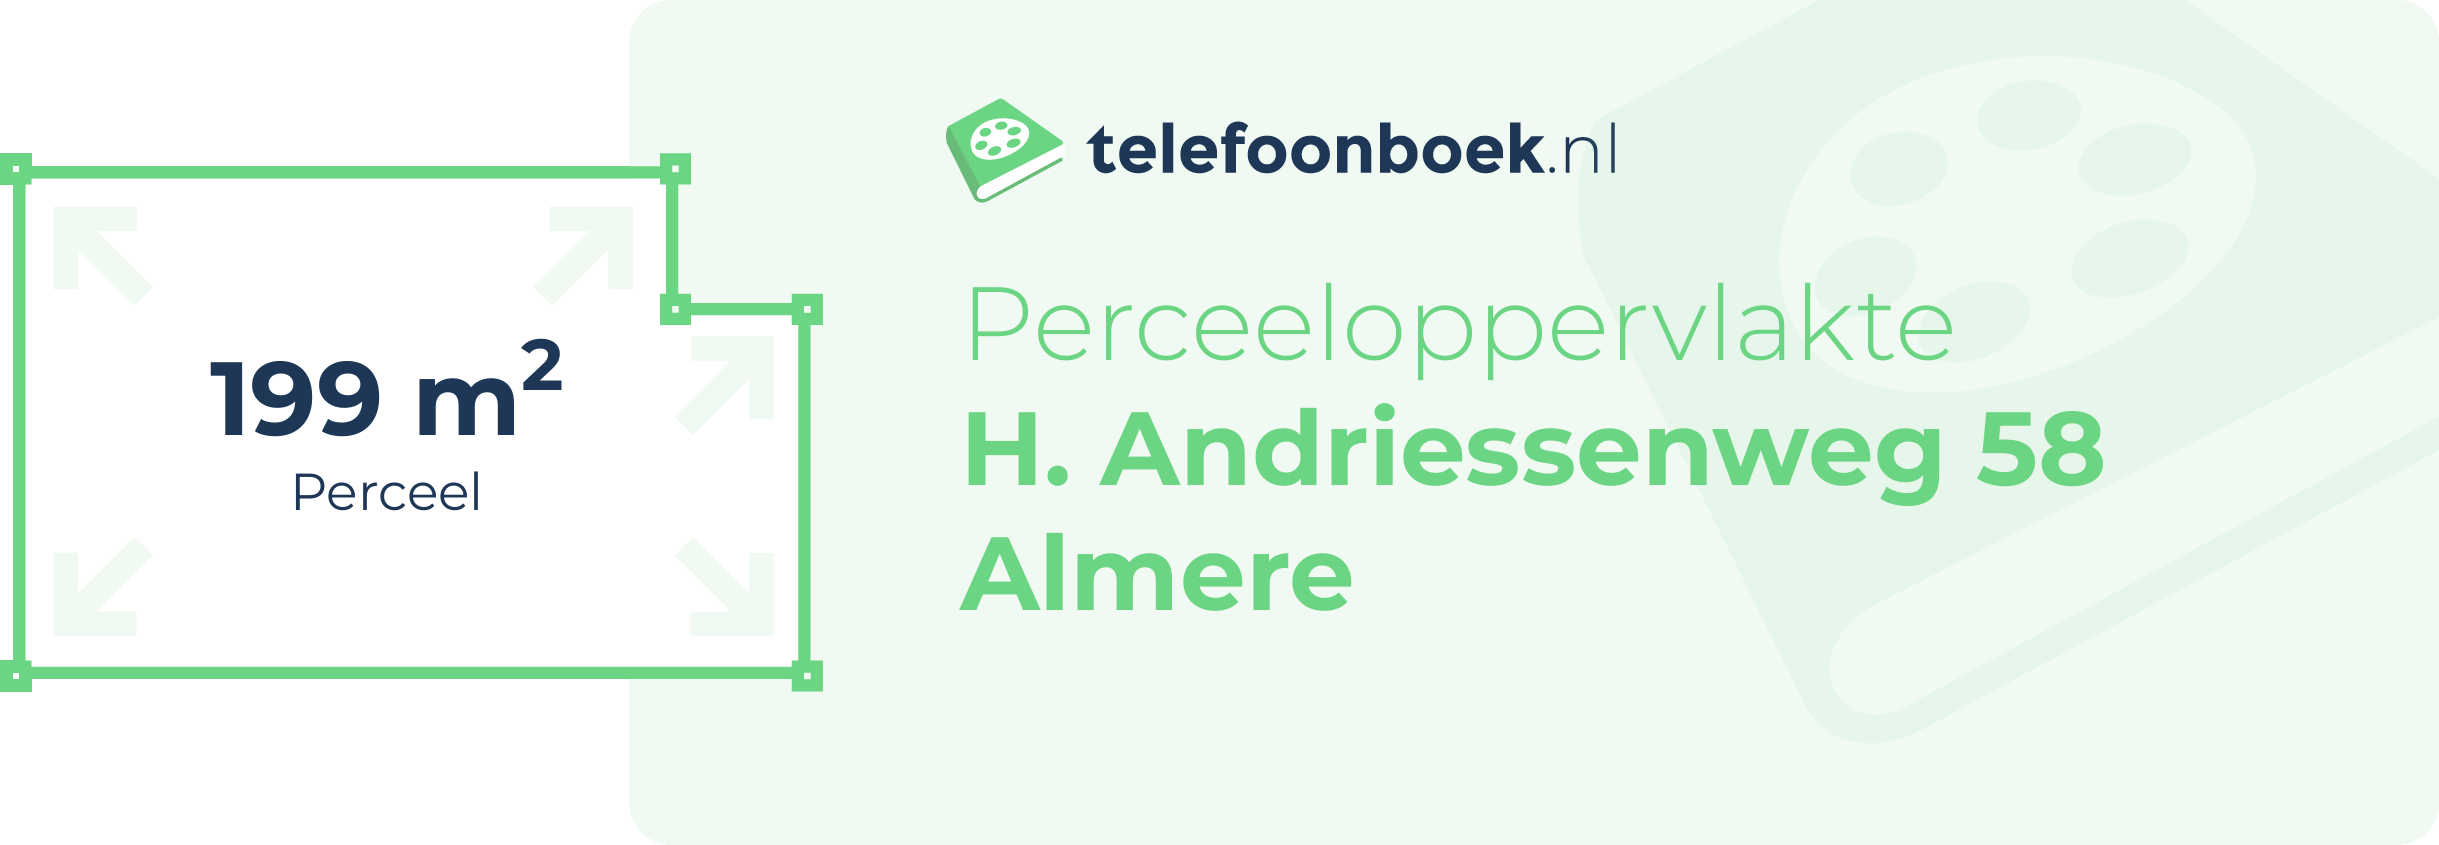 Perceeloppervlakte H. Andriessenweg 58 Almere